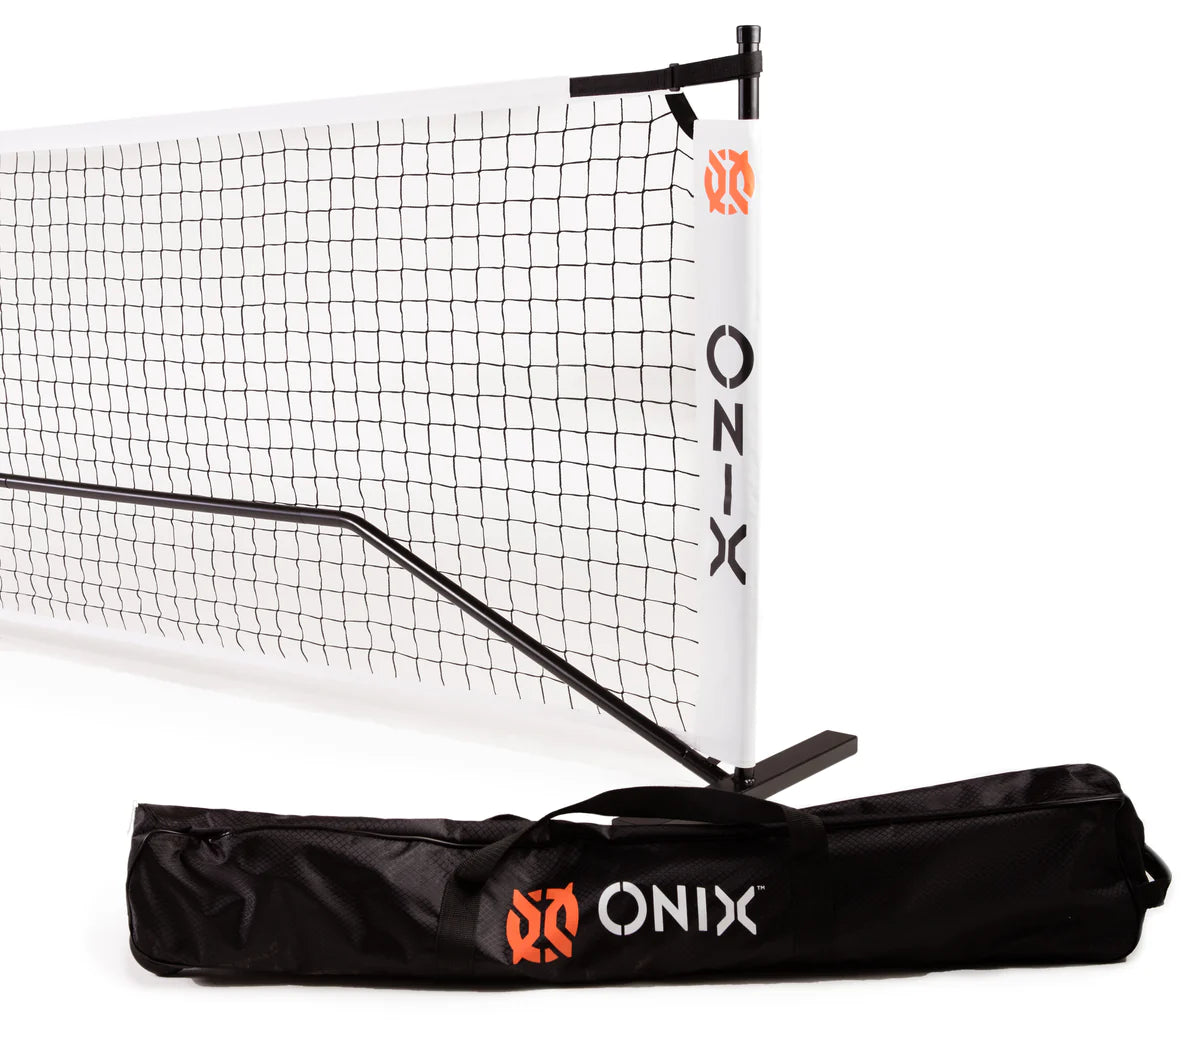 Onix 2 in 1 Pickleball Net & Bag